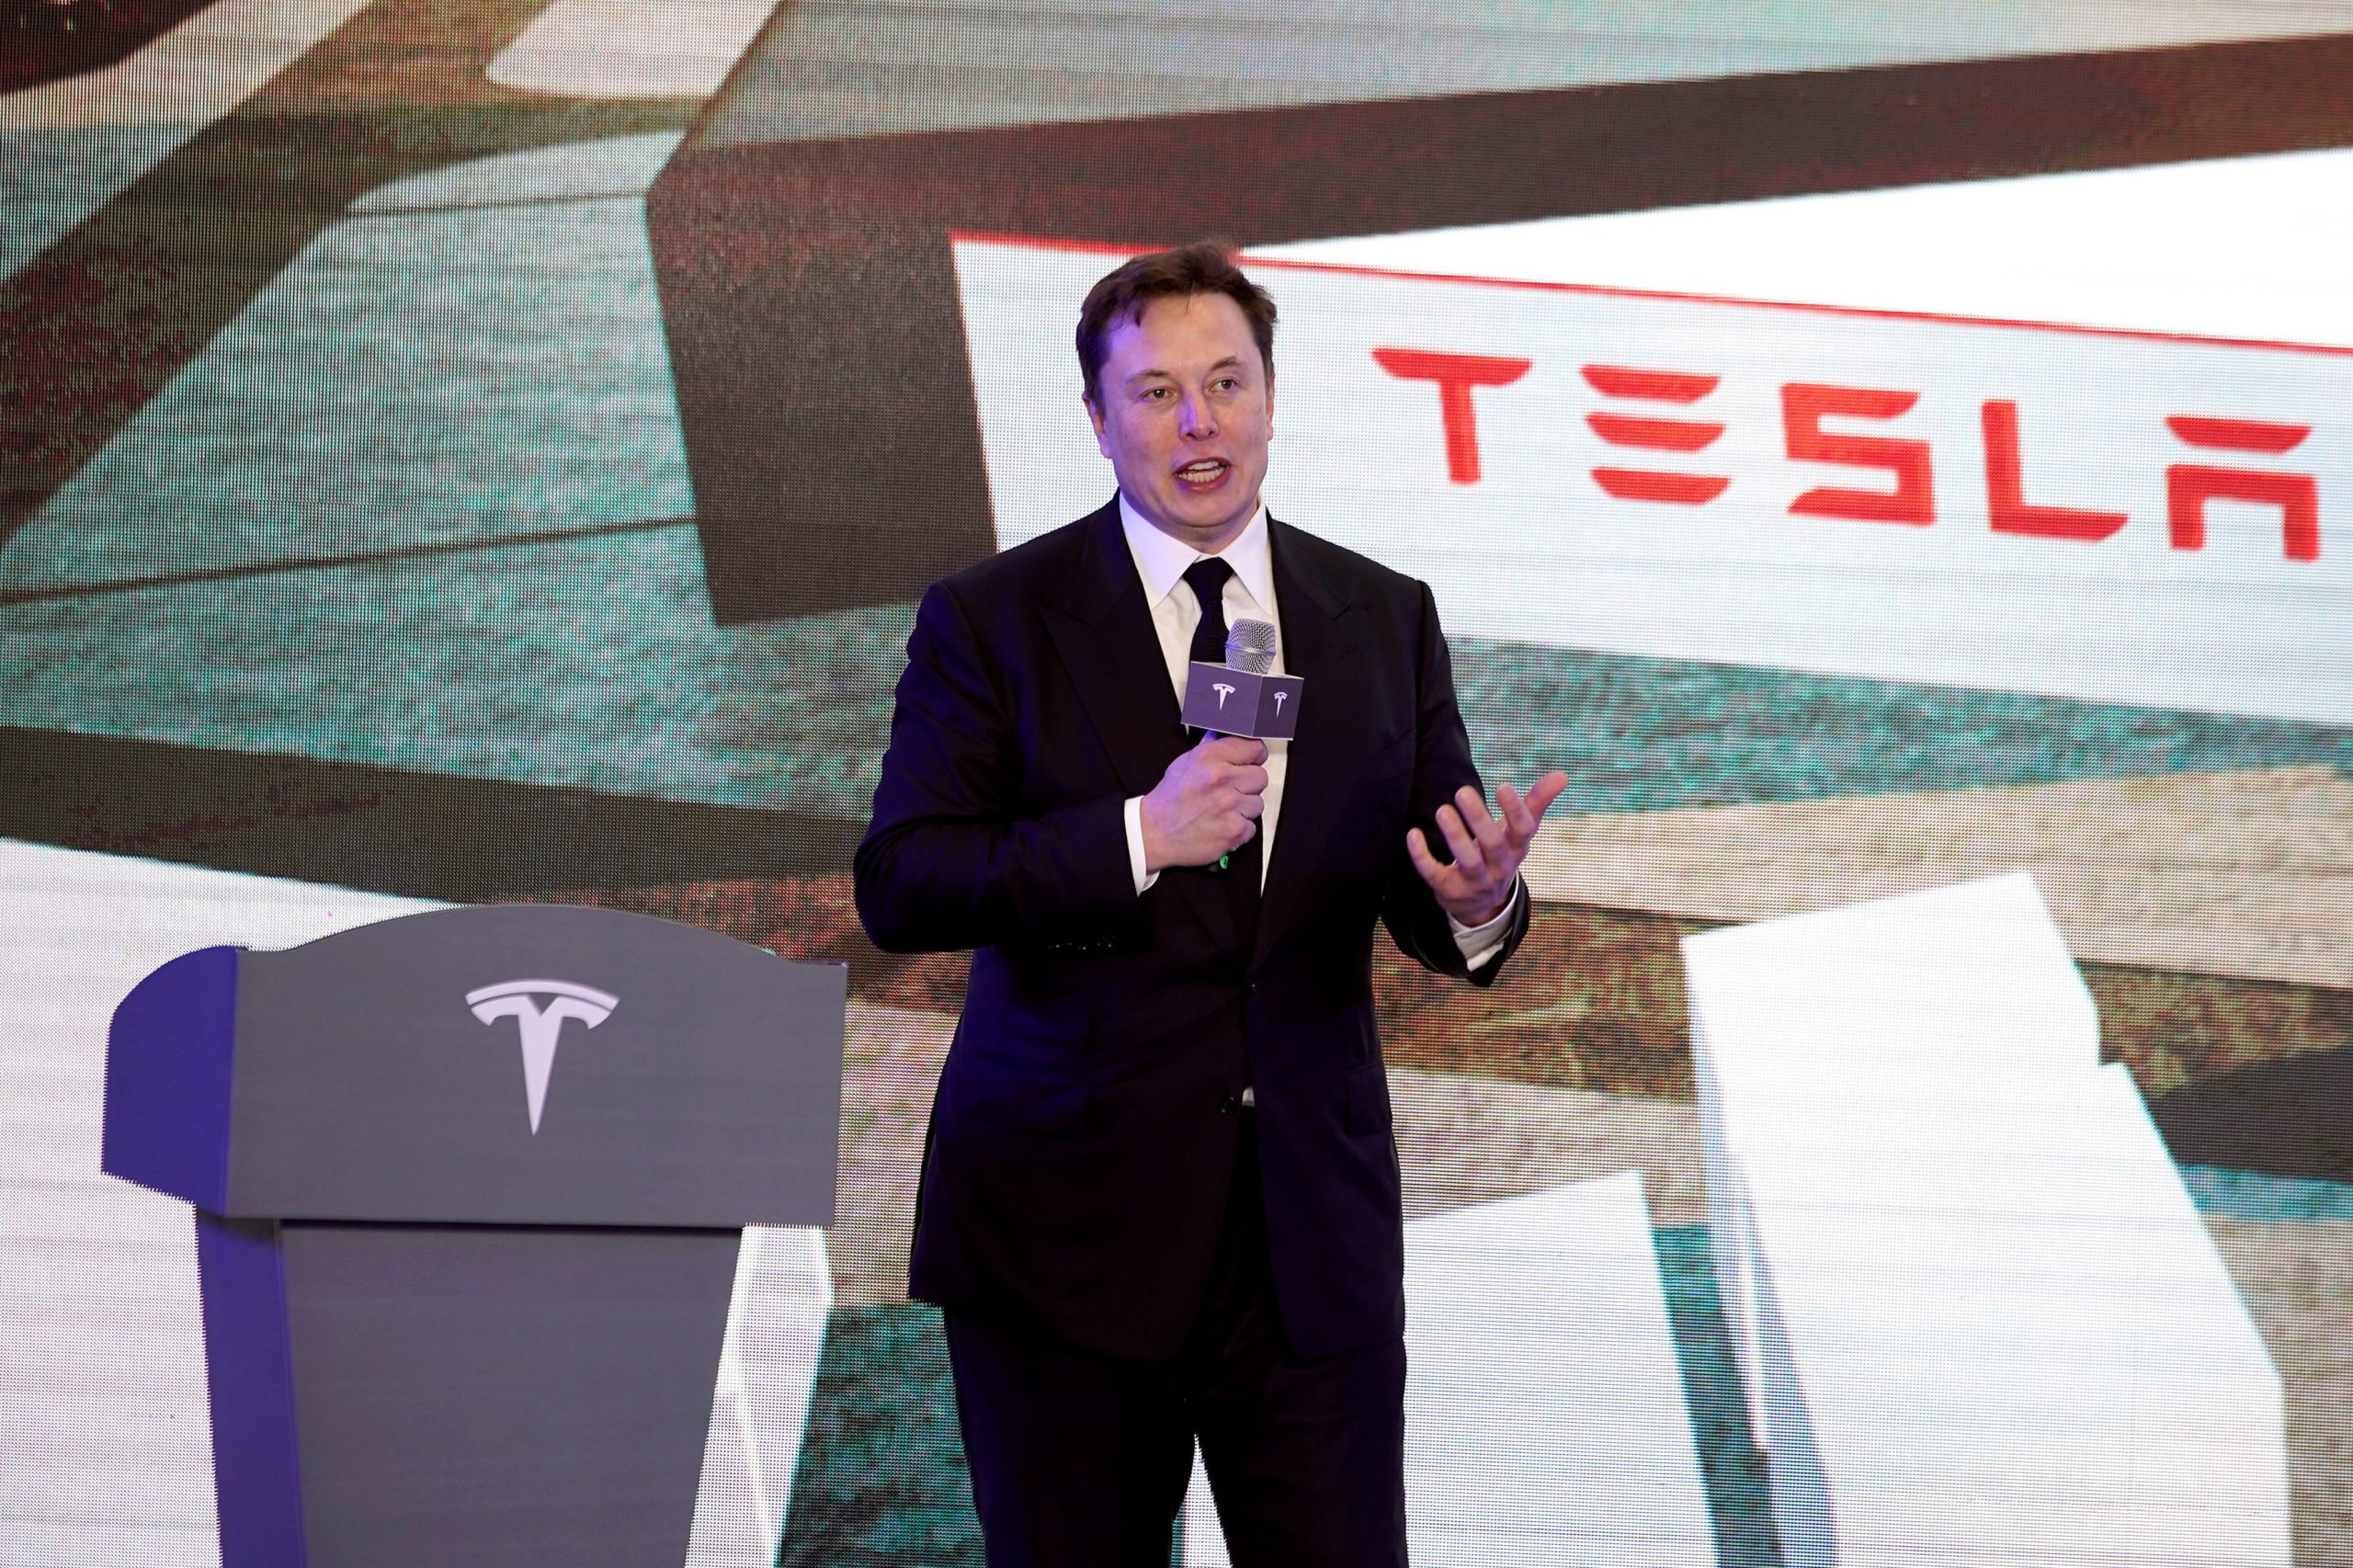 S&P’s Tesla snub exhibits the dangers to this overheating Nasdaq commerce